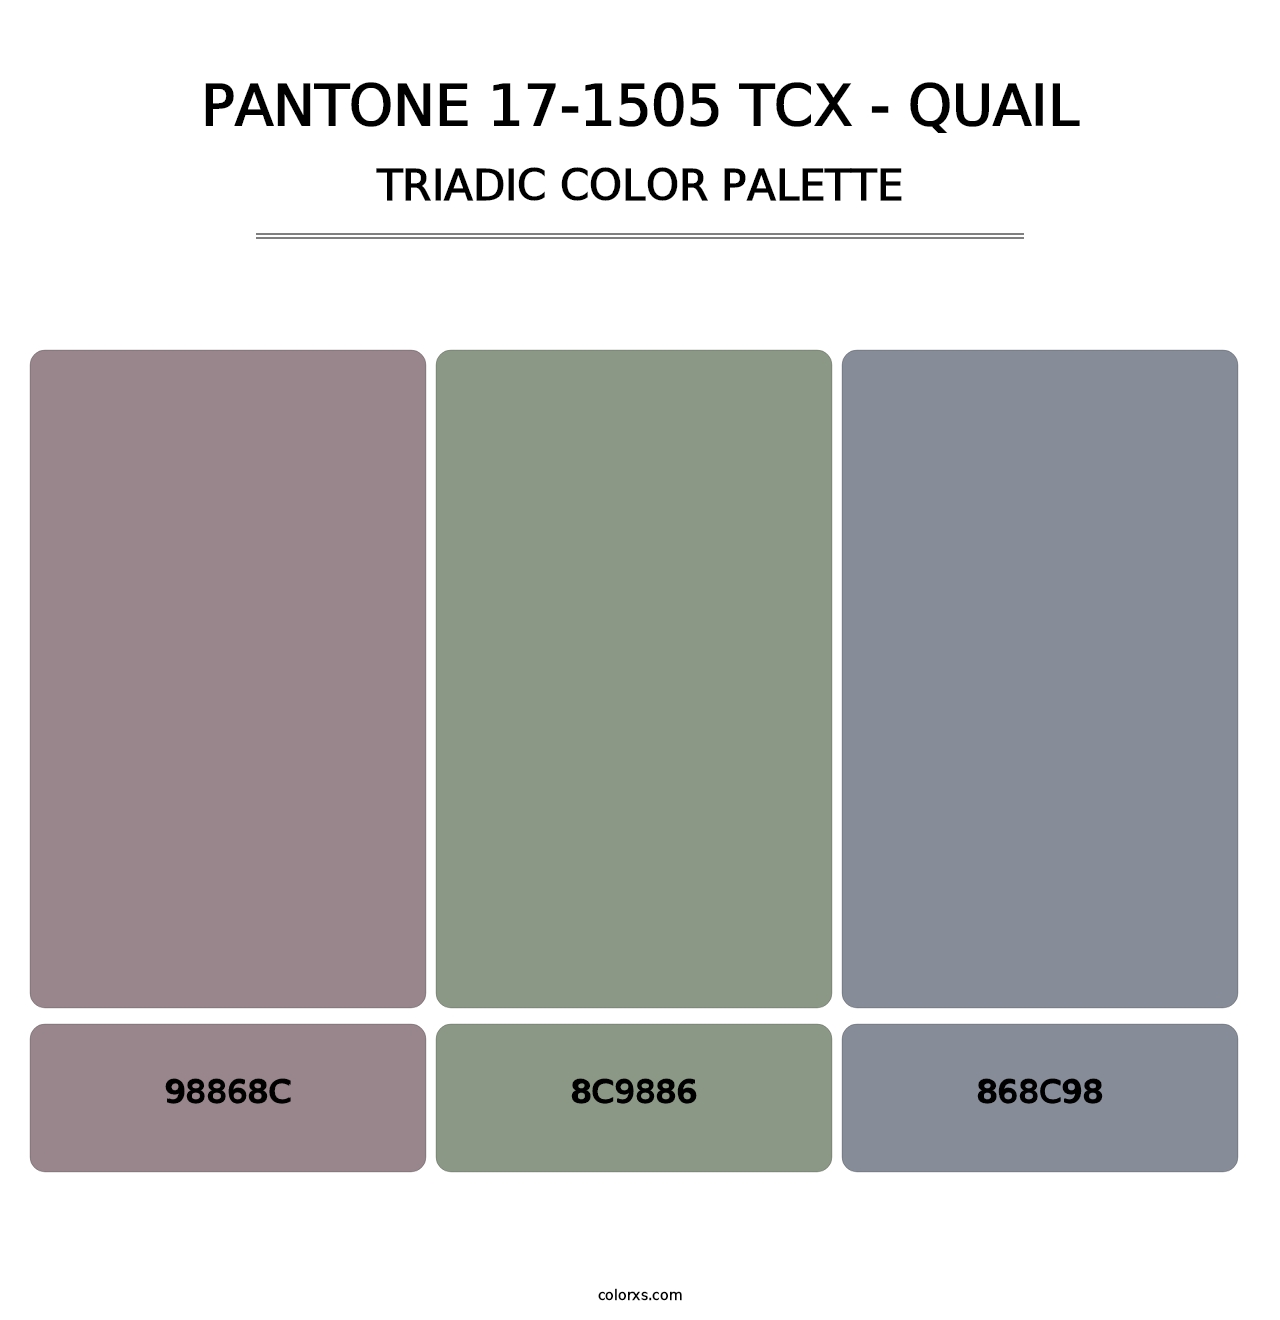 PANTONE 17-1505 TCX - Quail - Triadic Color Palette